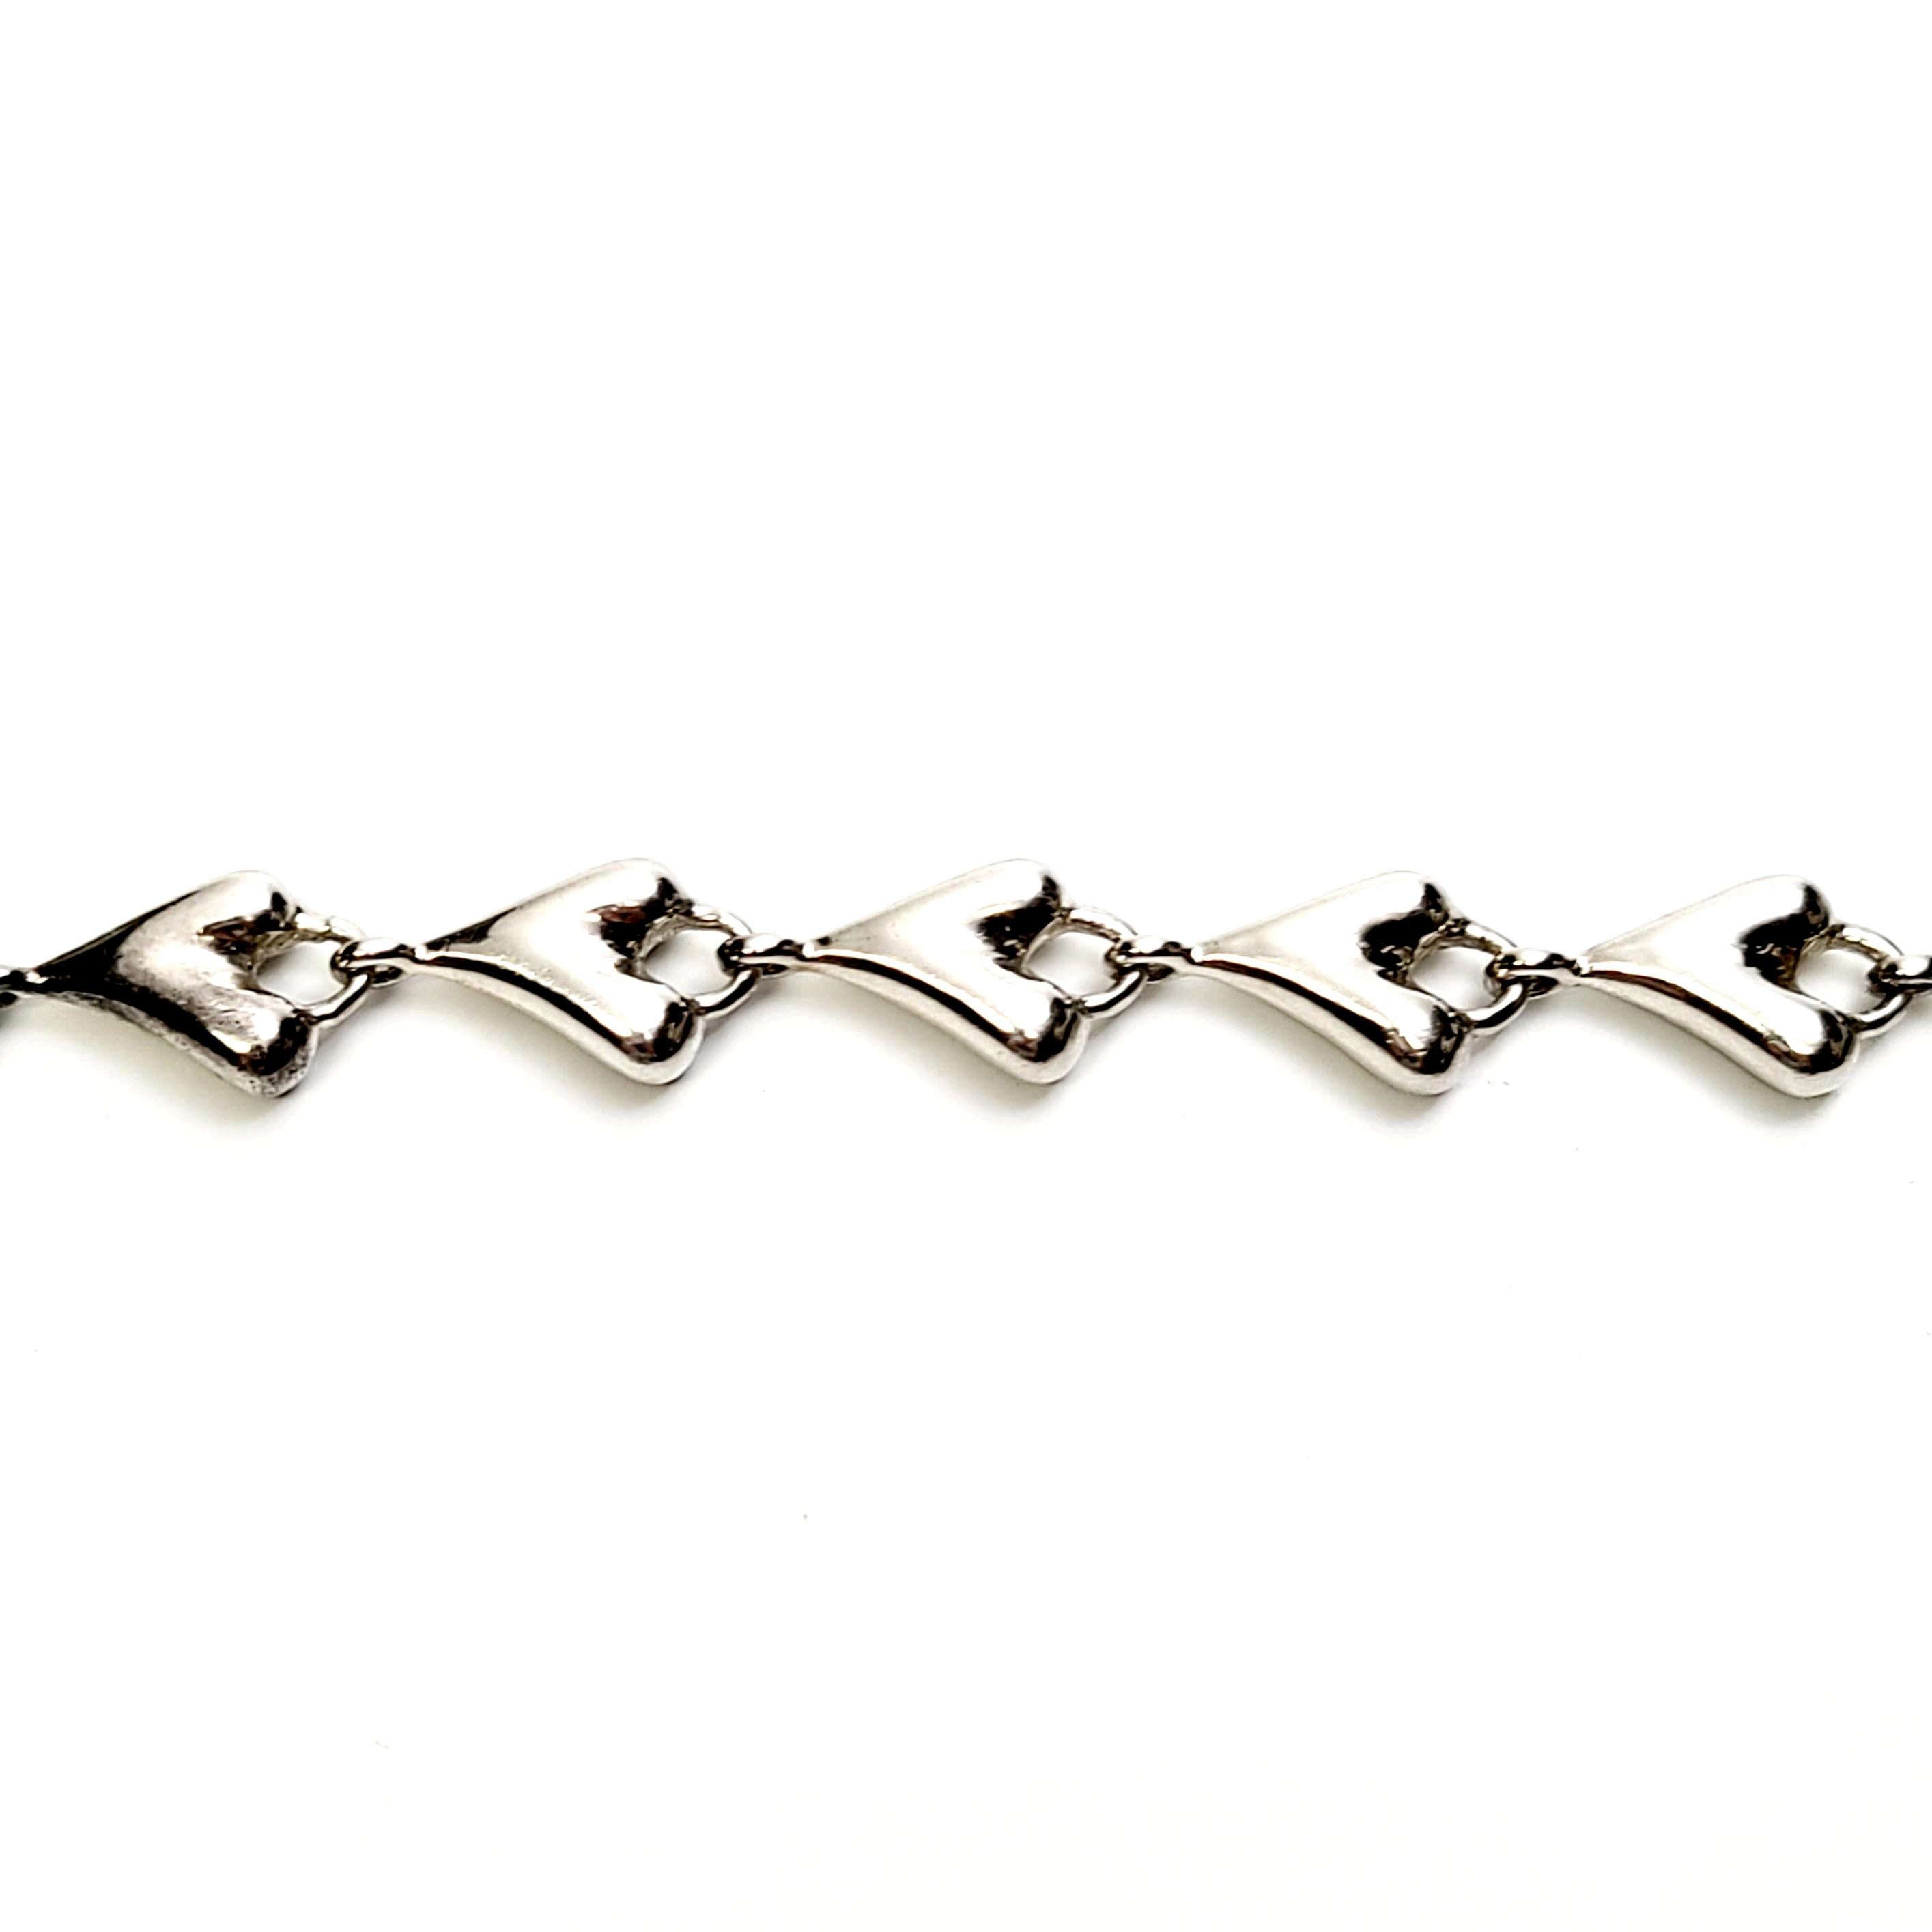 Sterling silver heart bracelet by designer Robert Lee Morris.

This modernist designer piece features elongated heart links.

Measures approx 7 1/2